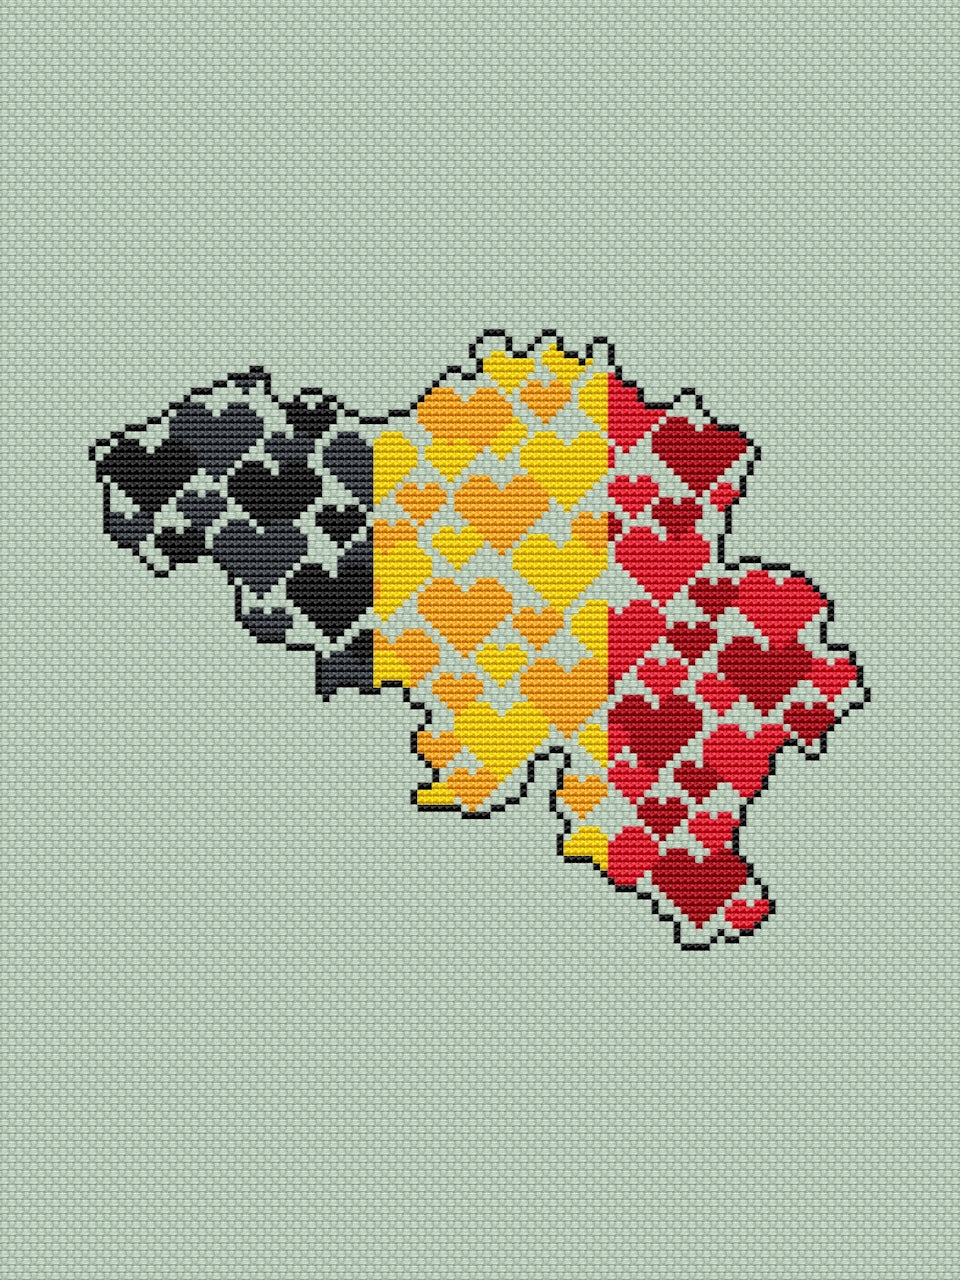 Belgium - free cross stitch pattern